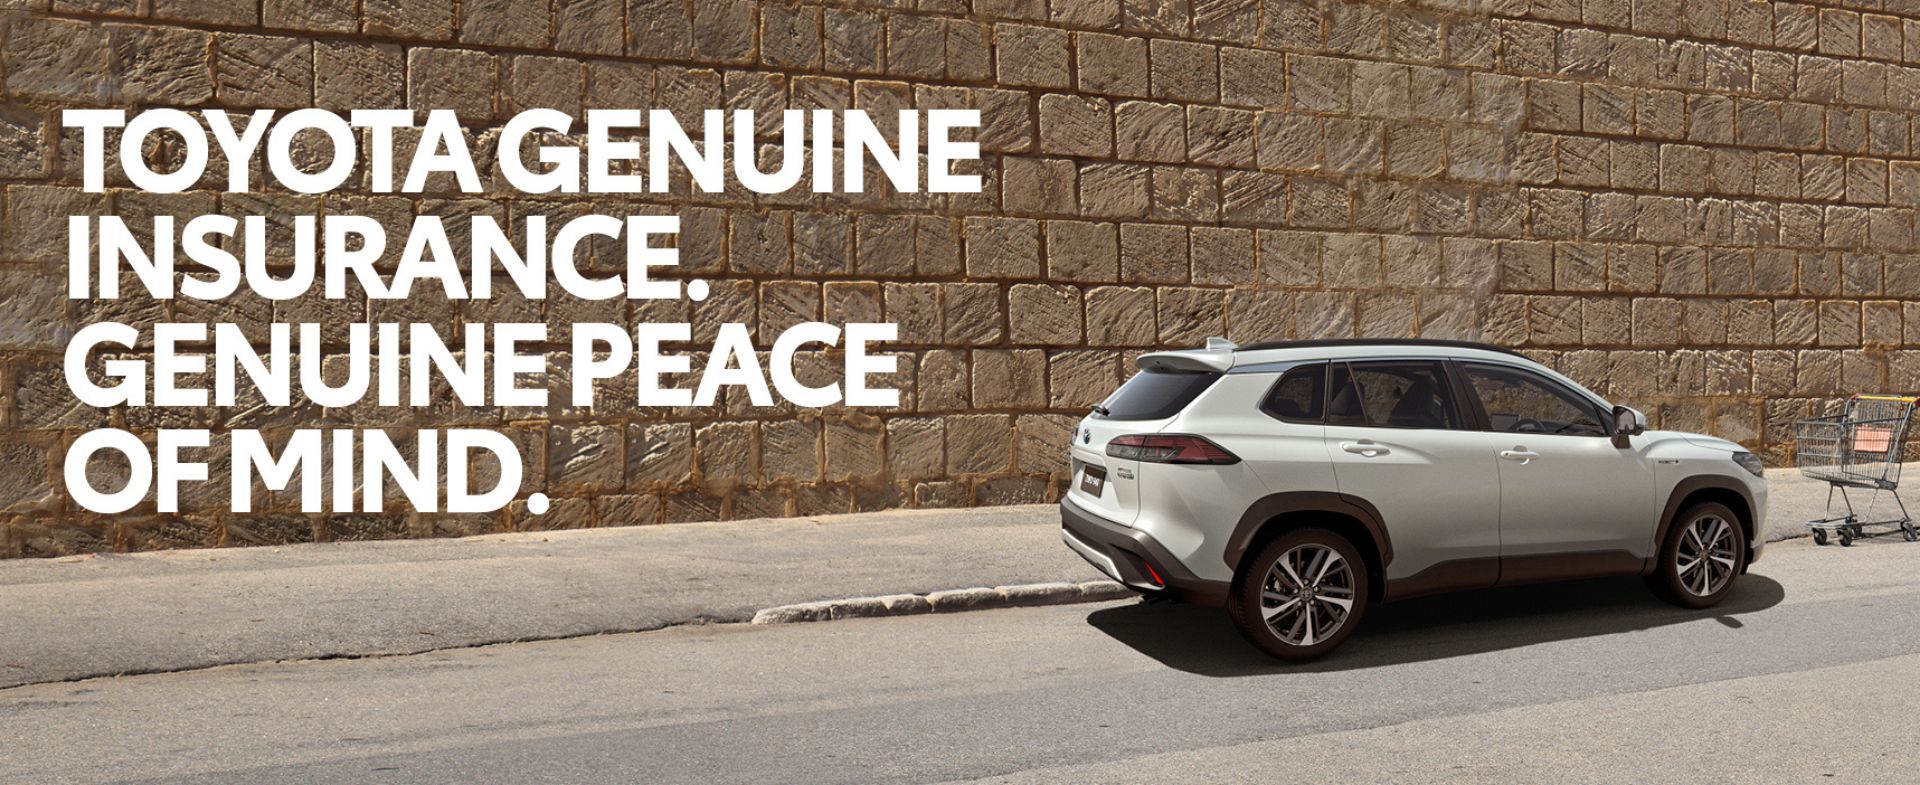 Toyota Genuine Insurance. Genuine Peace of Mind. 